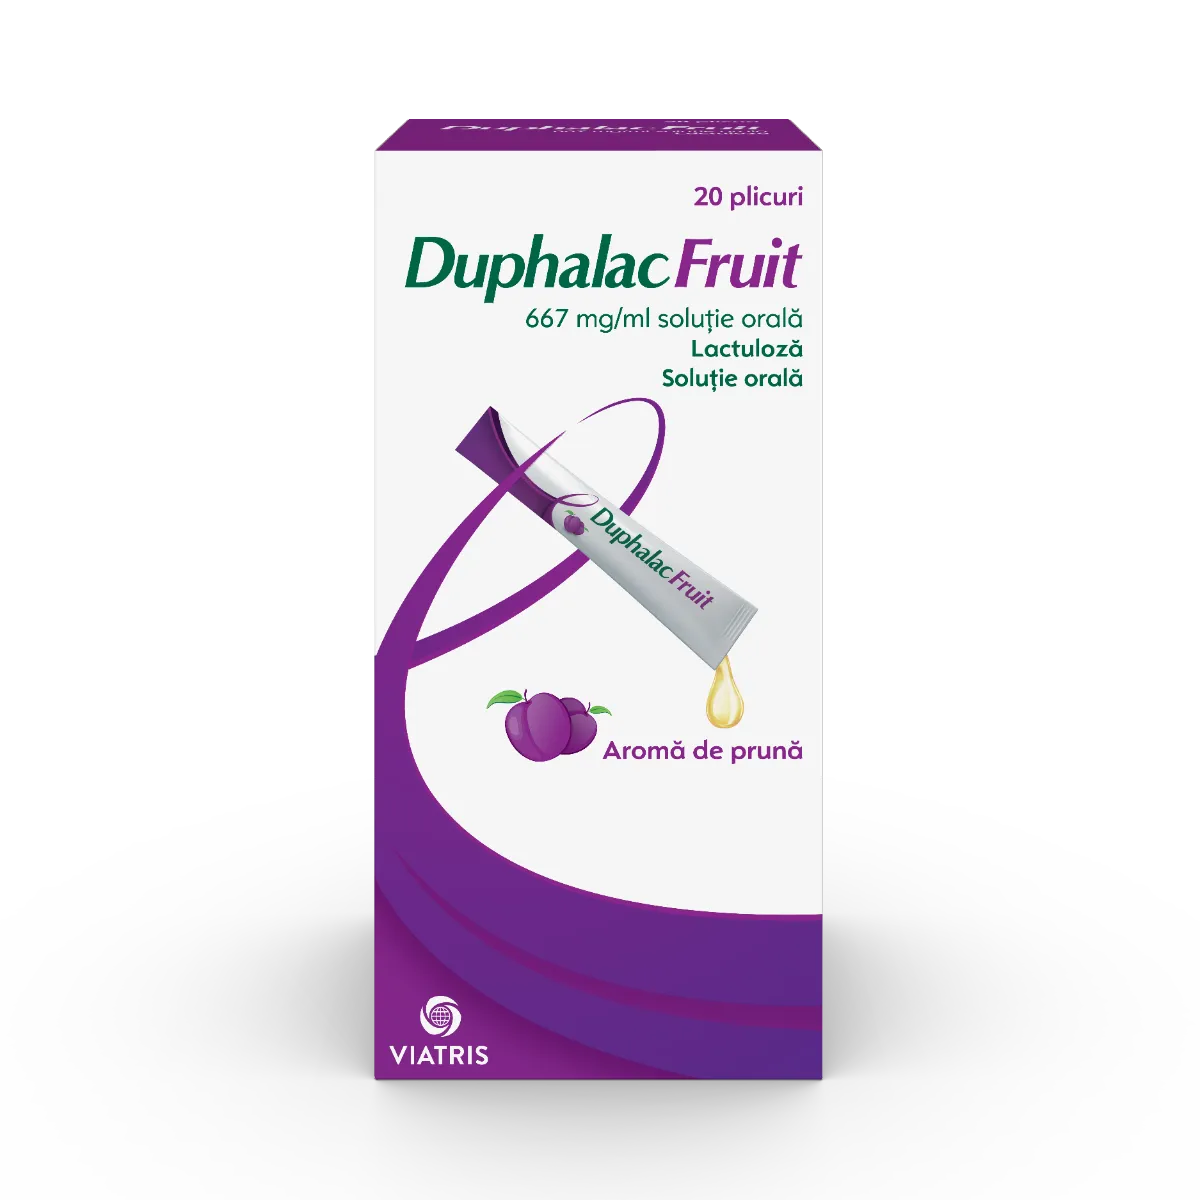 Duphalac Fruit solutie orala 667 mg/ml Lactuloza, 20 plicuri, Viatris 